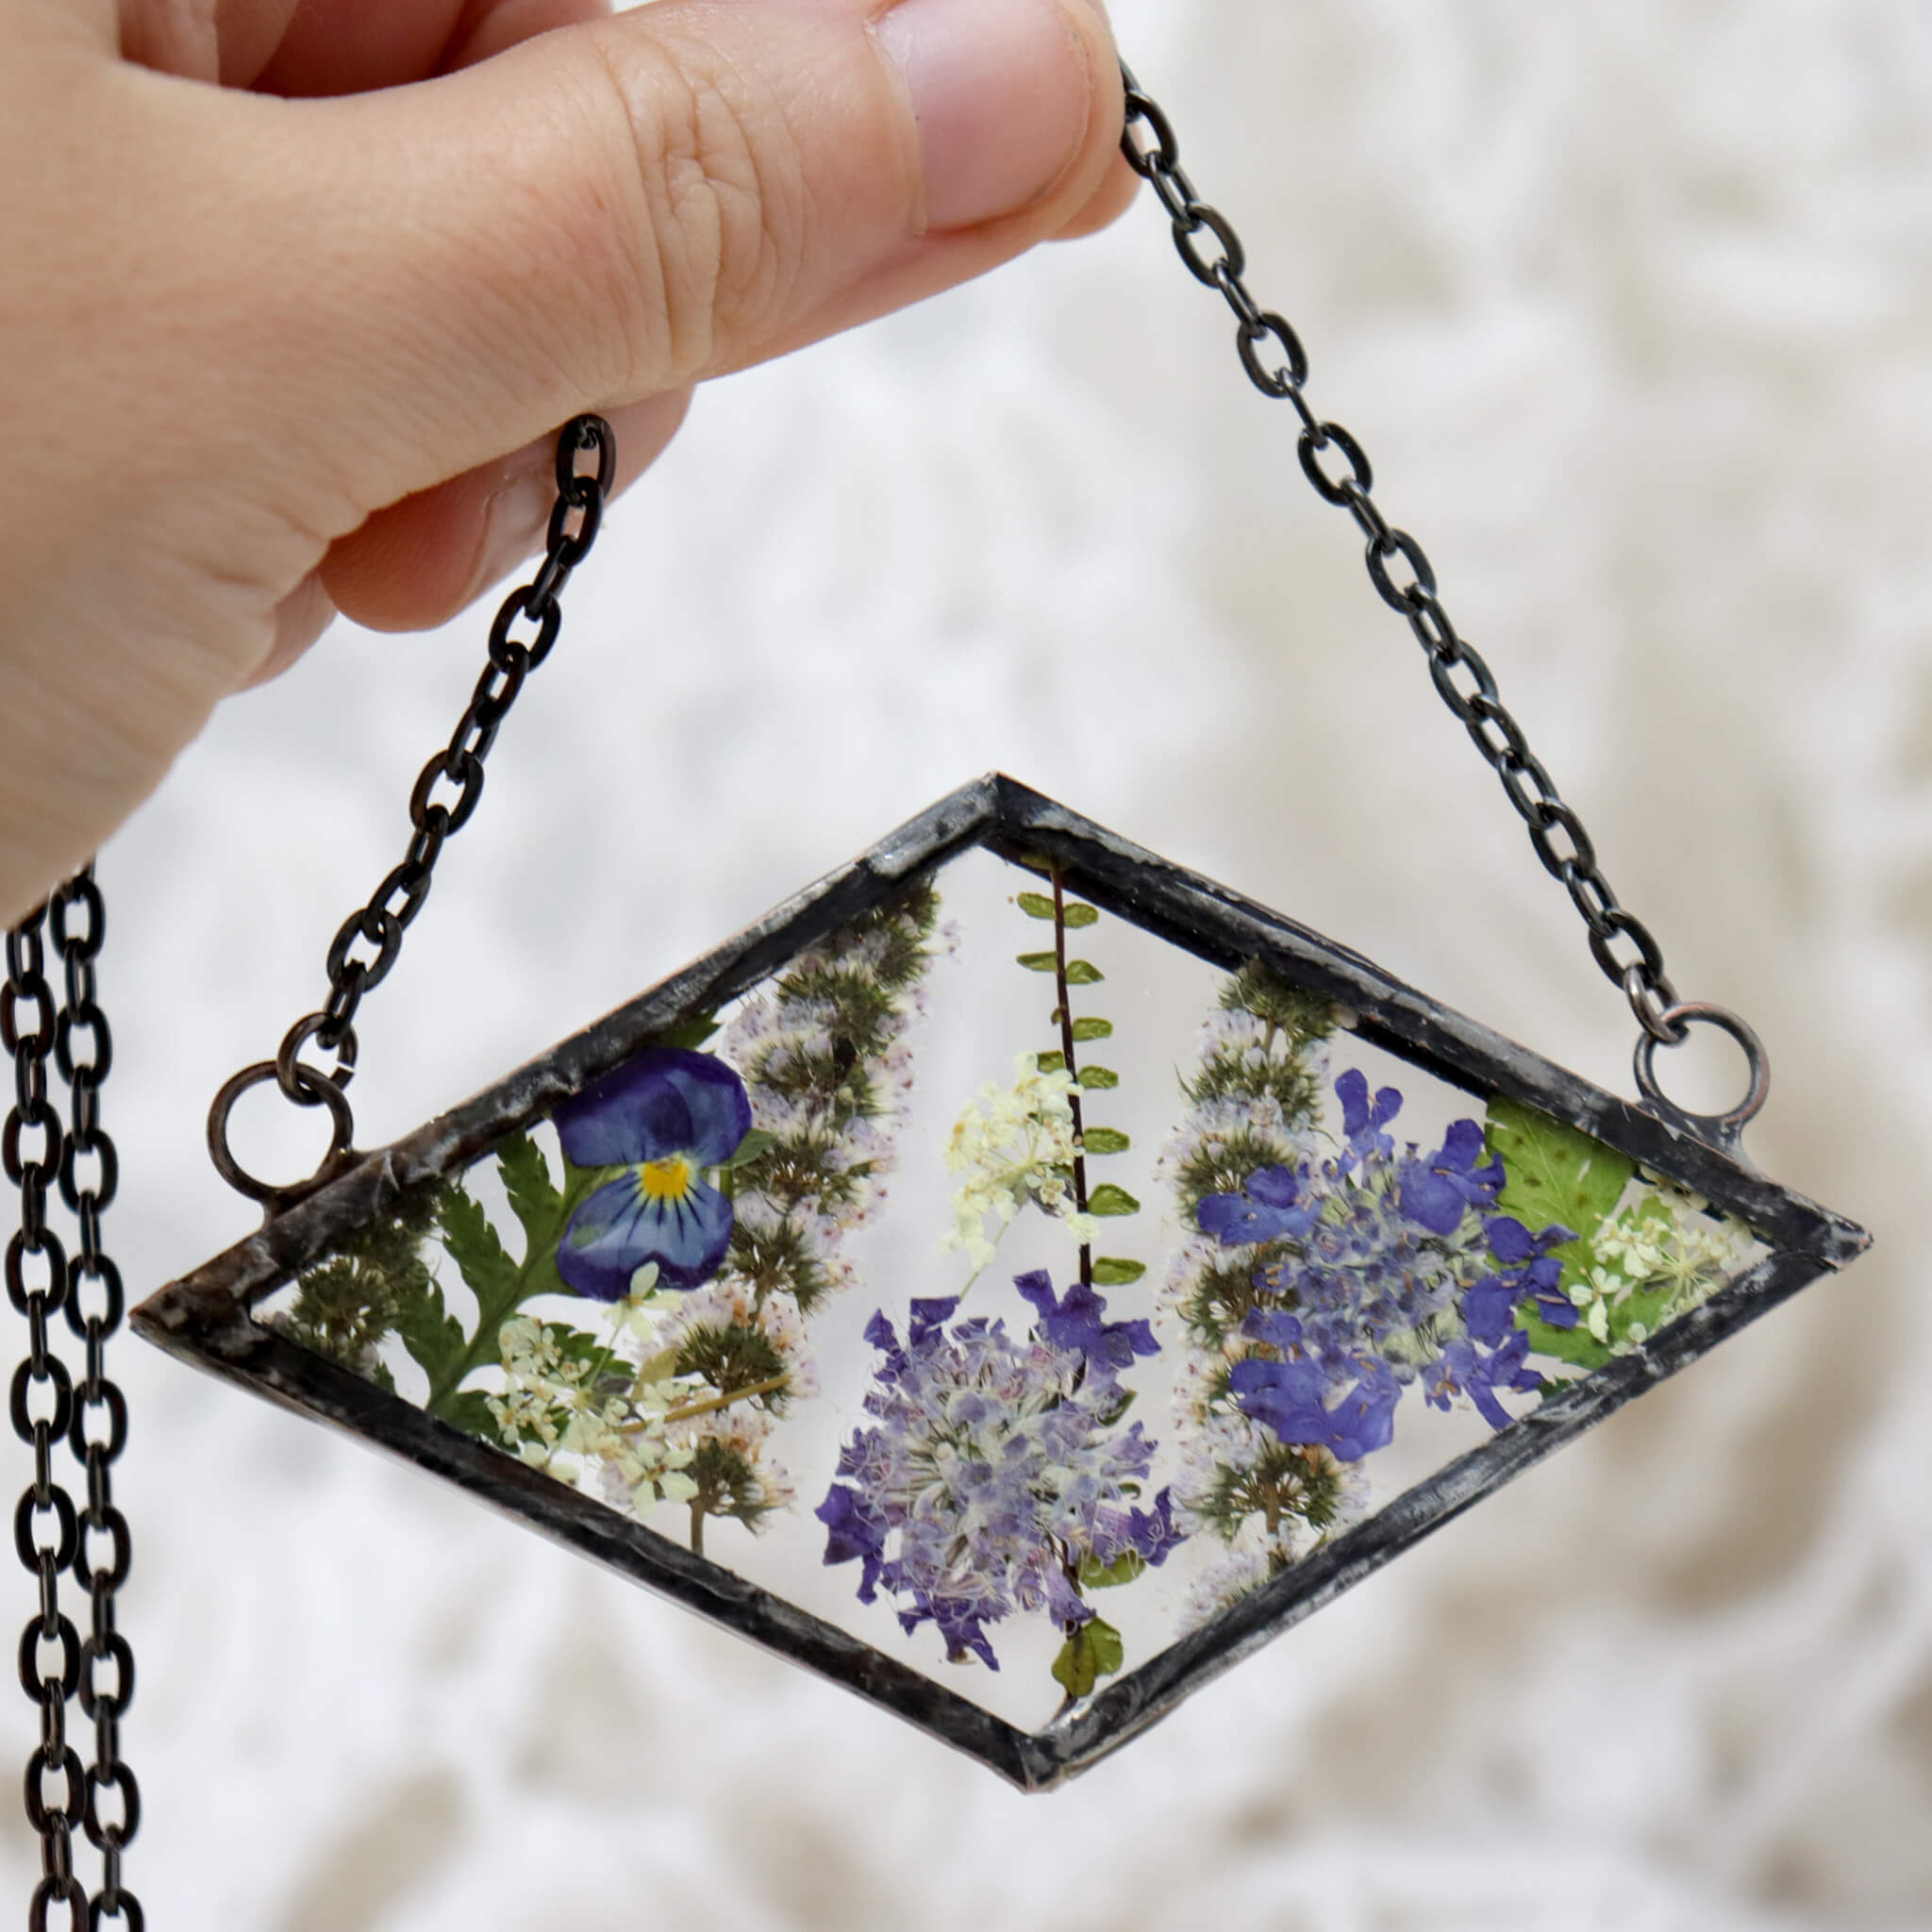 Hand holding Rhomboidal purple pressed flower necklace